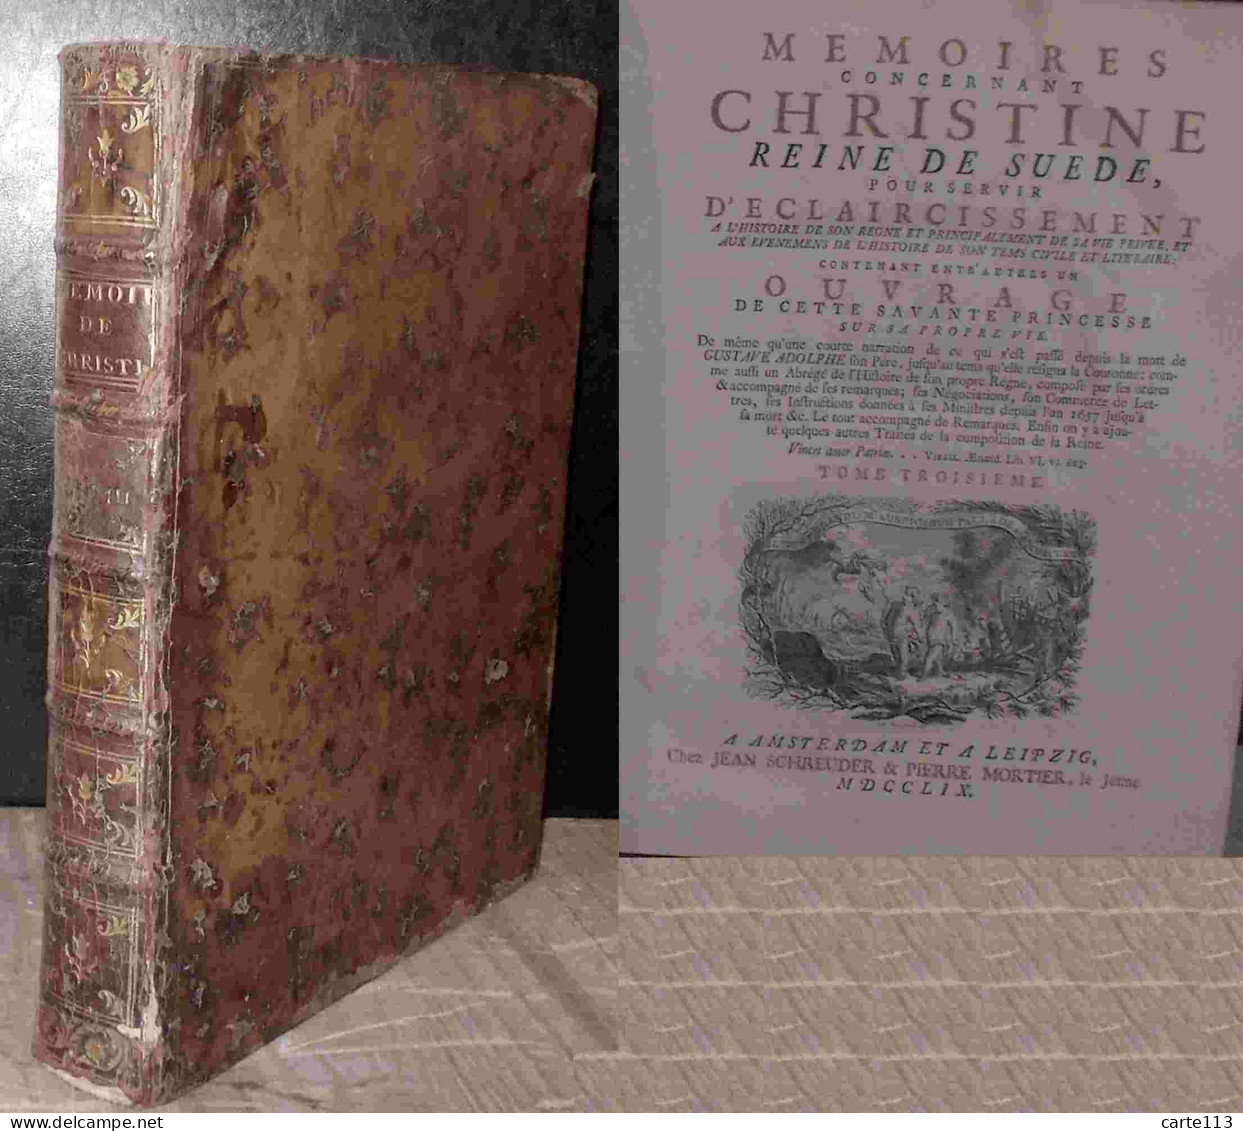 ARCKENHOLTZ Johann - MEMOIRES CONCERNANT CHRISTINE REINE DE SUEDE - VOLUME III - 1701-1800